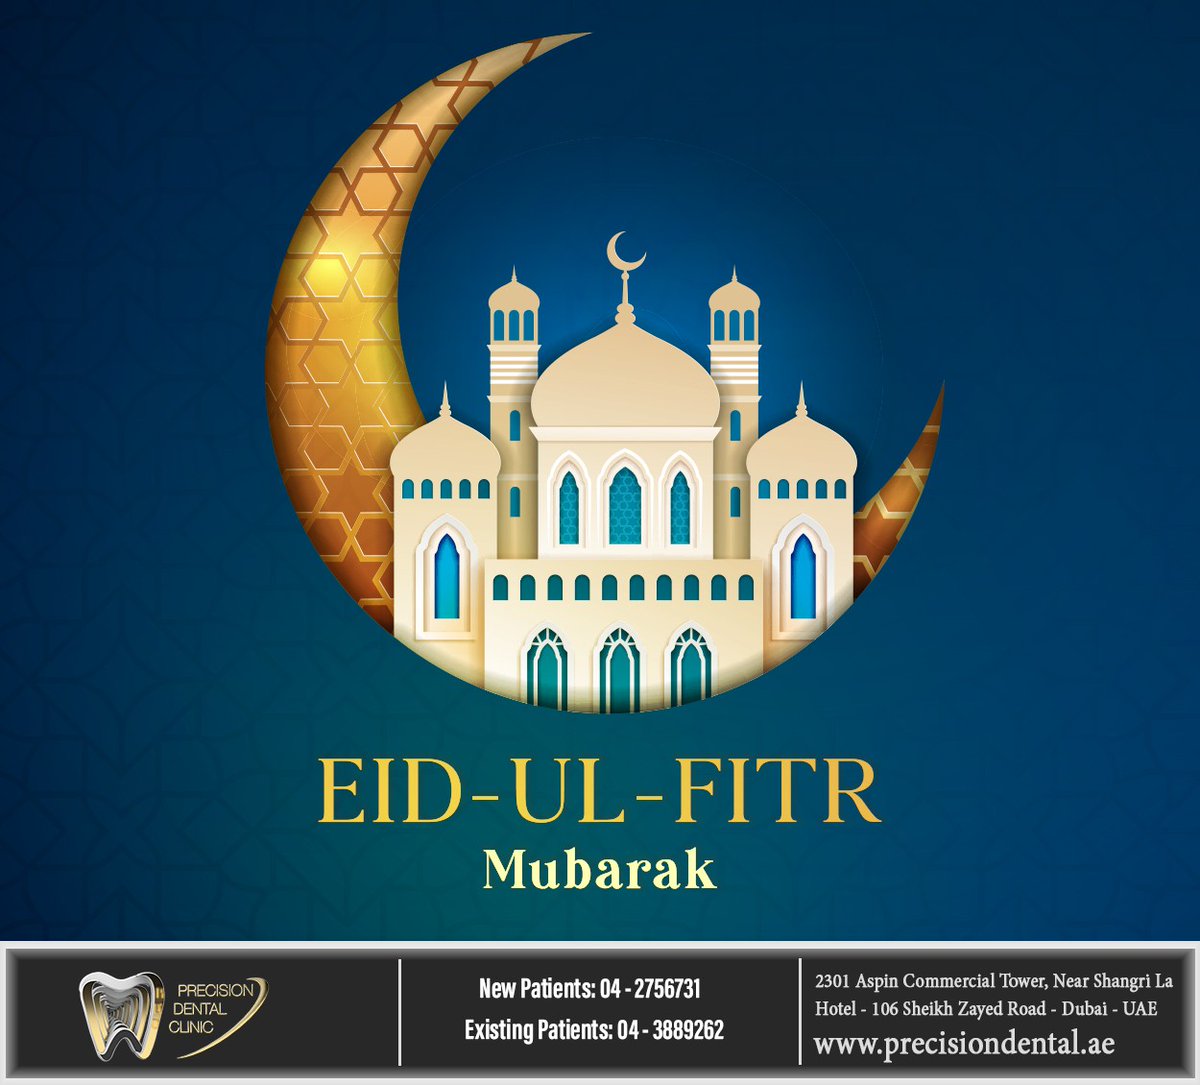 Eid Mubarak. Wishing you peace and prosperity as you celebrate Eid with your loved ones. #eidmubarak #eidulfitr #happyeid #precisiondentalclinic #dubai